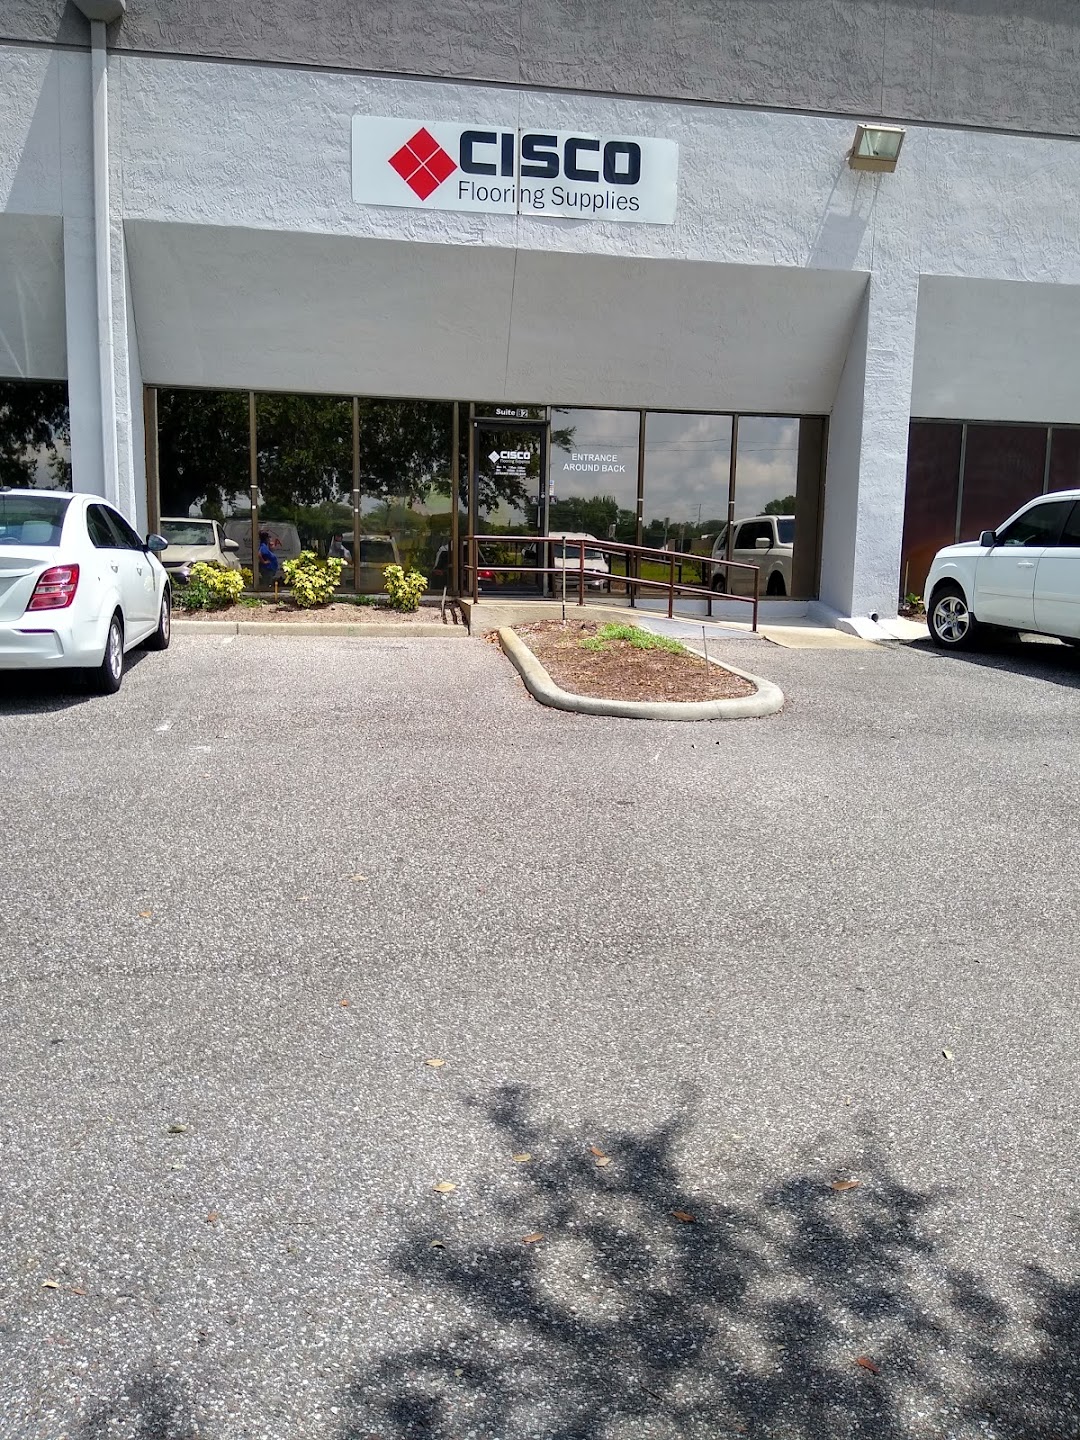 Cisco Flooring Supplies In The City Orlando